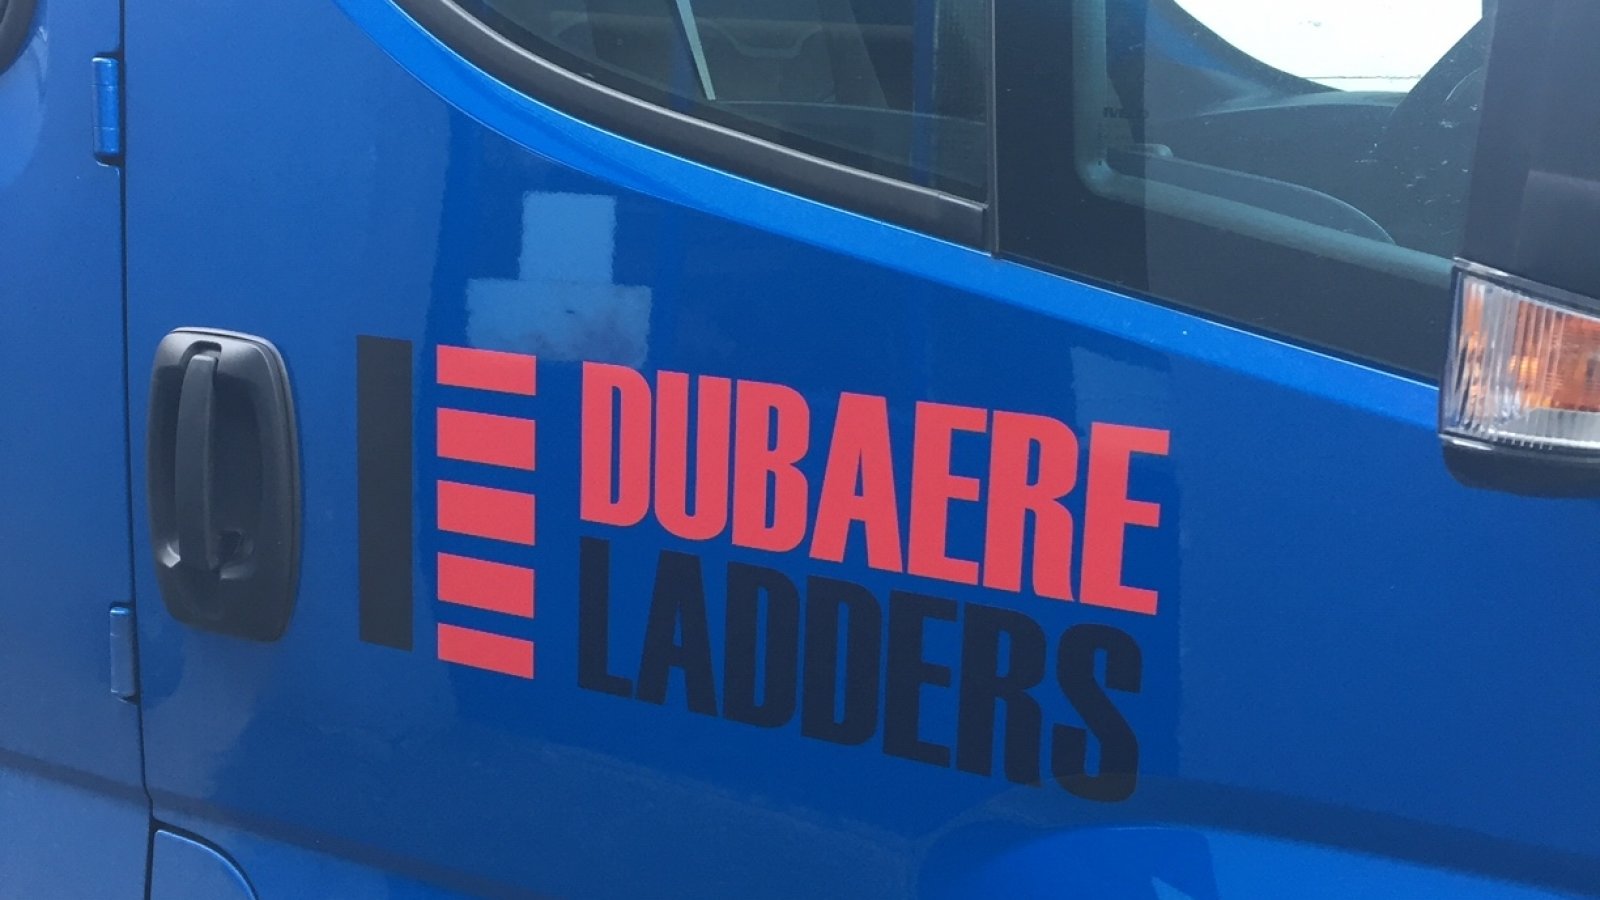 Alles - Nieuws - Dubaere Ladders